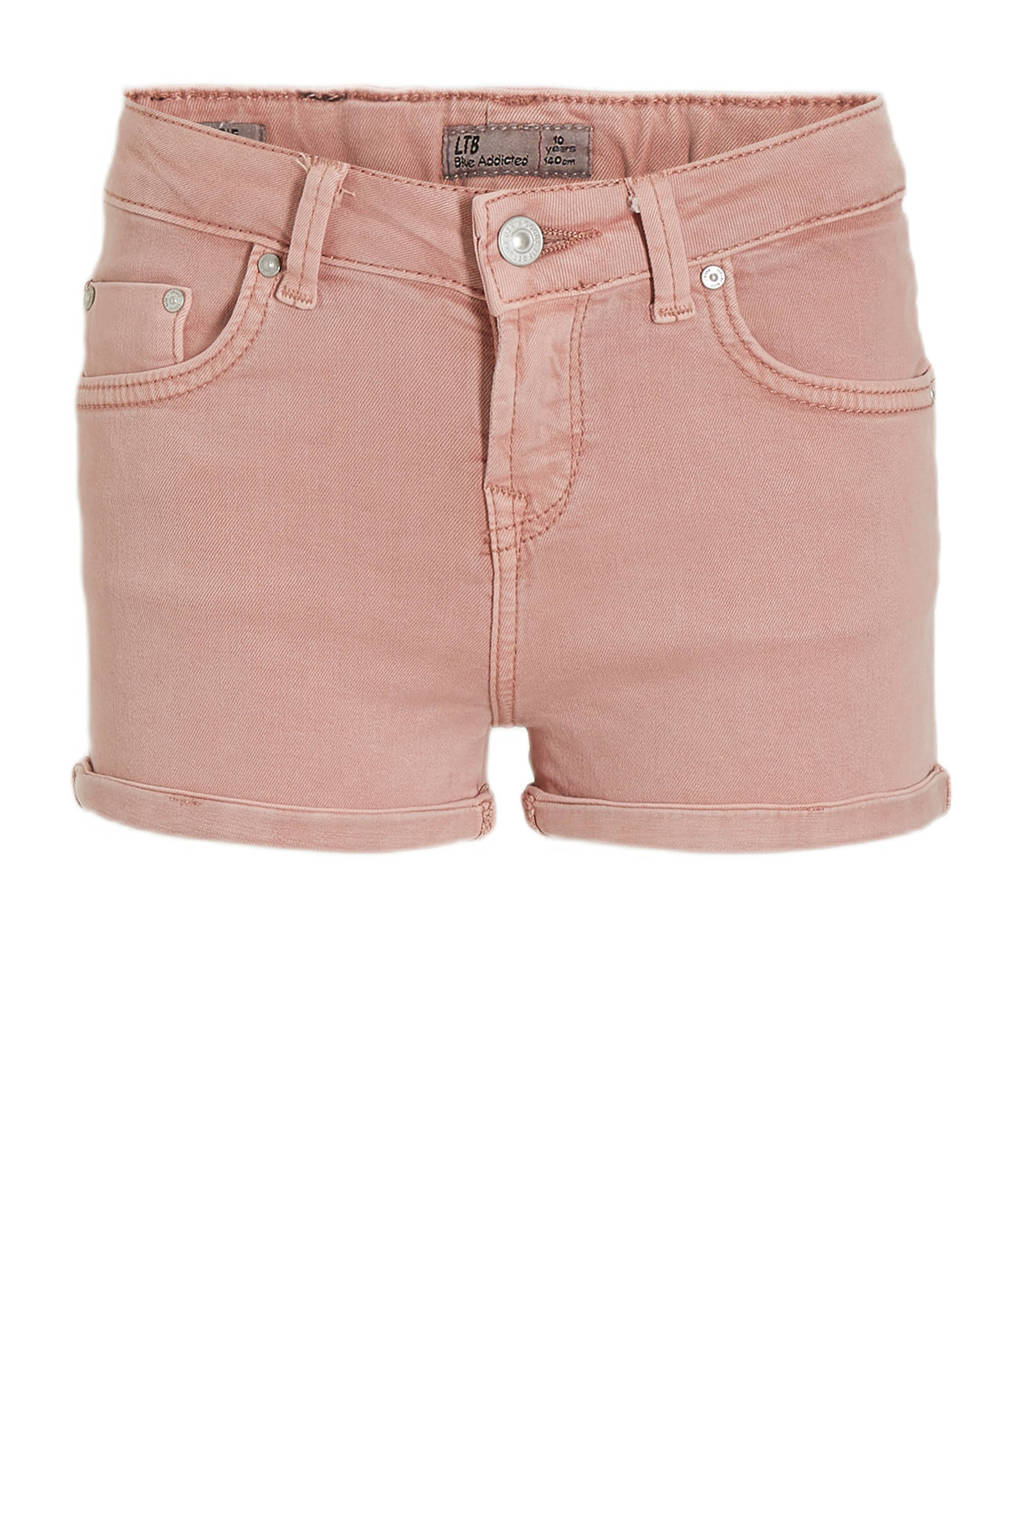 Roze meisjes LTB jeans short van stretchdenim met regular waist en rits- en knoopsluiting